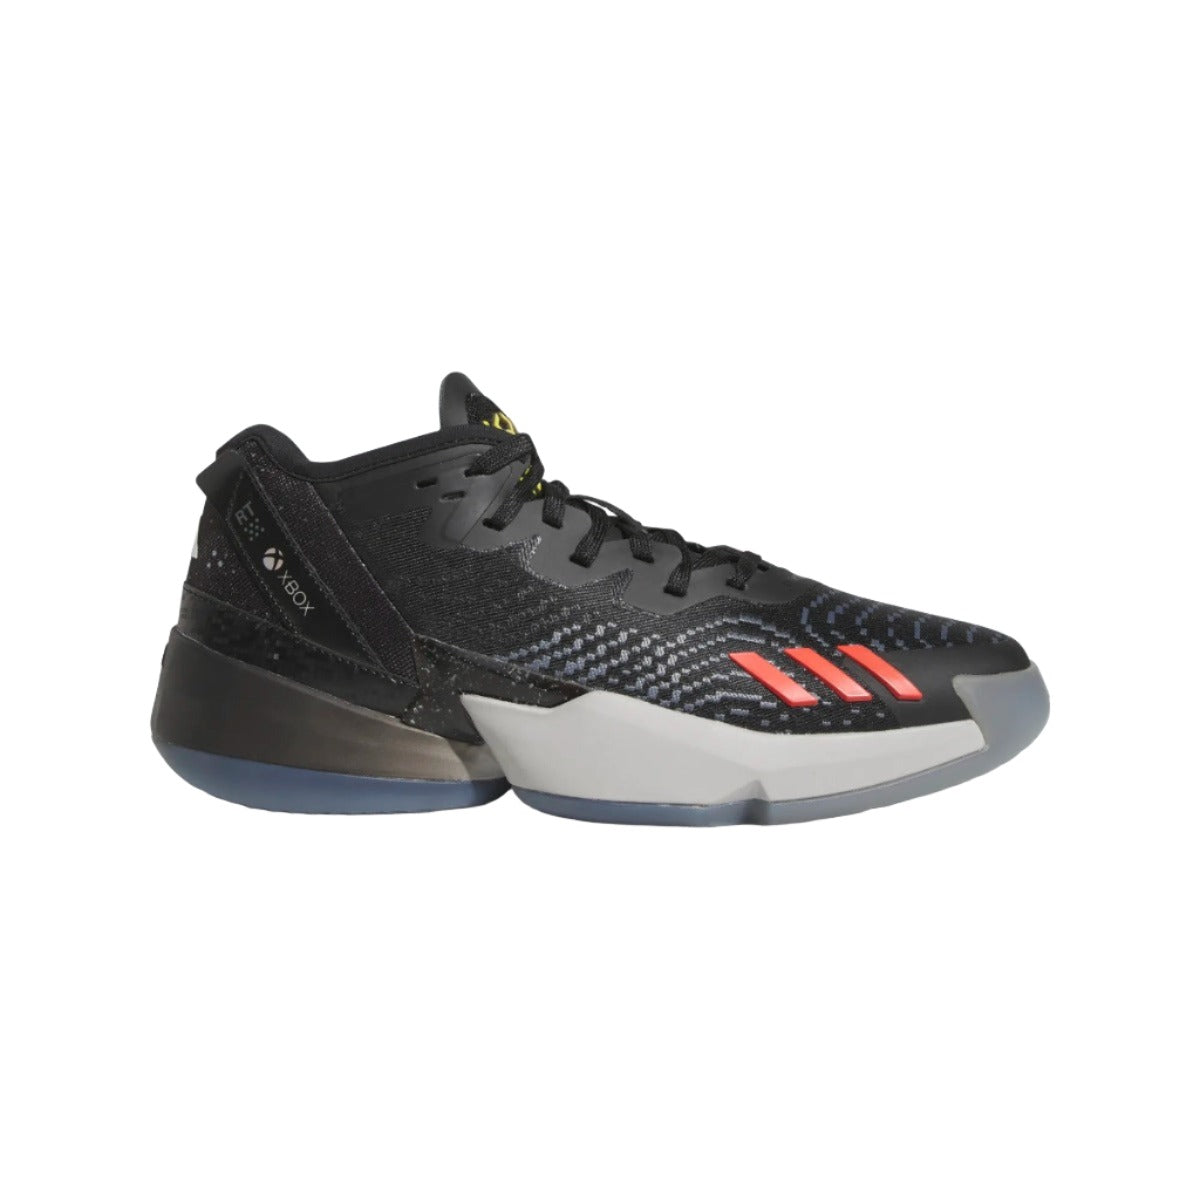 Adidas D.O.N. Issue 4 Basketball Shoes - Black